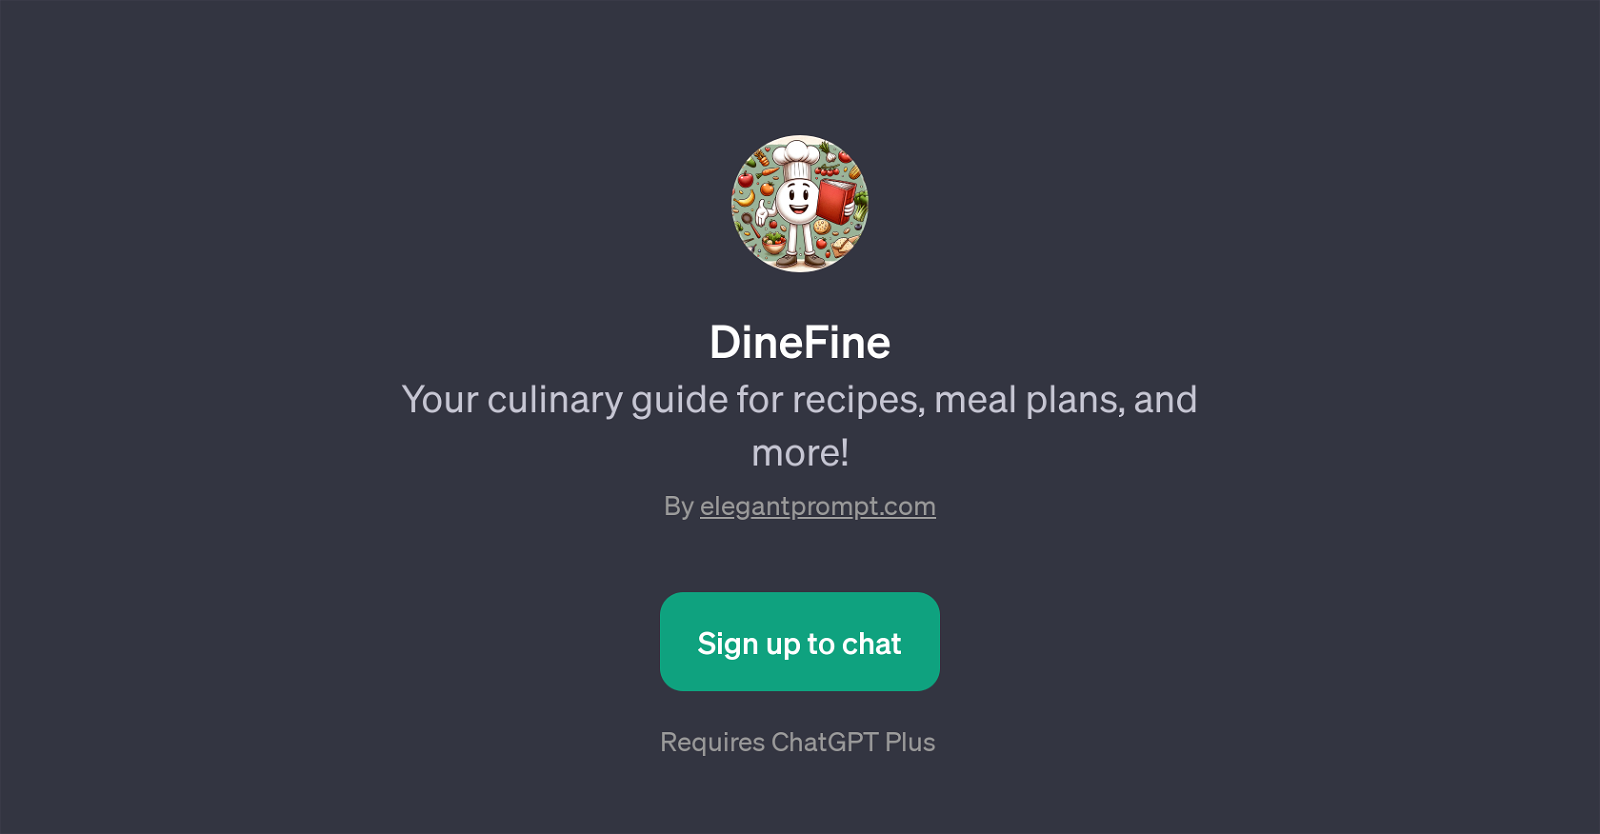 DineFine website